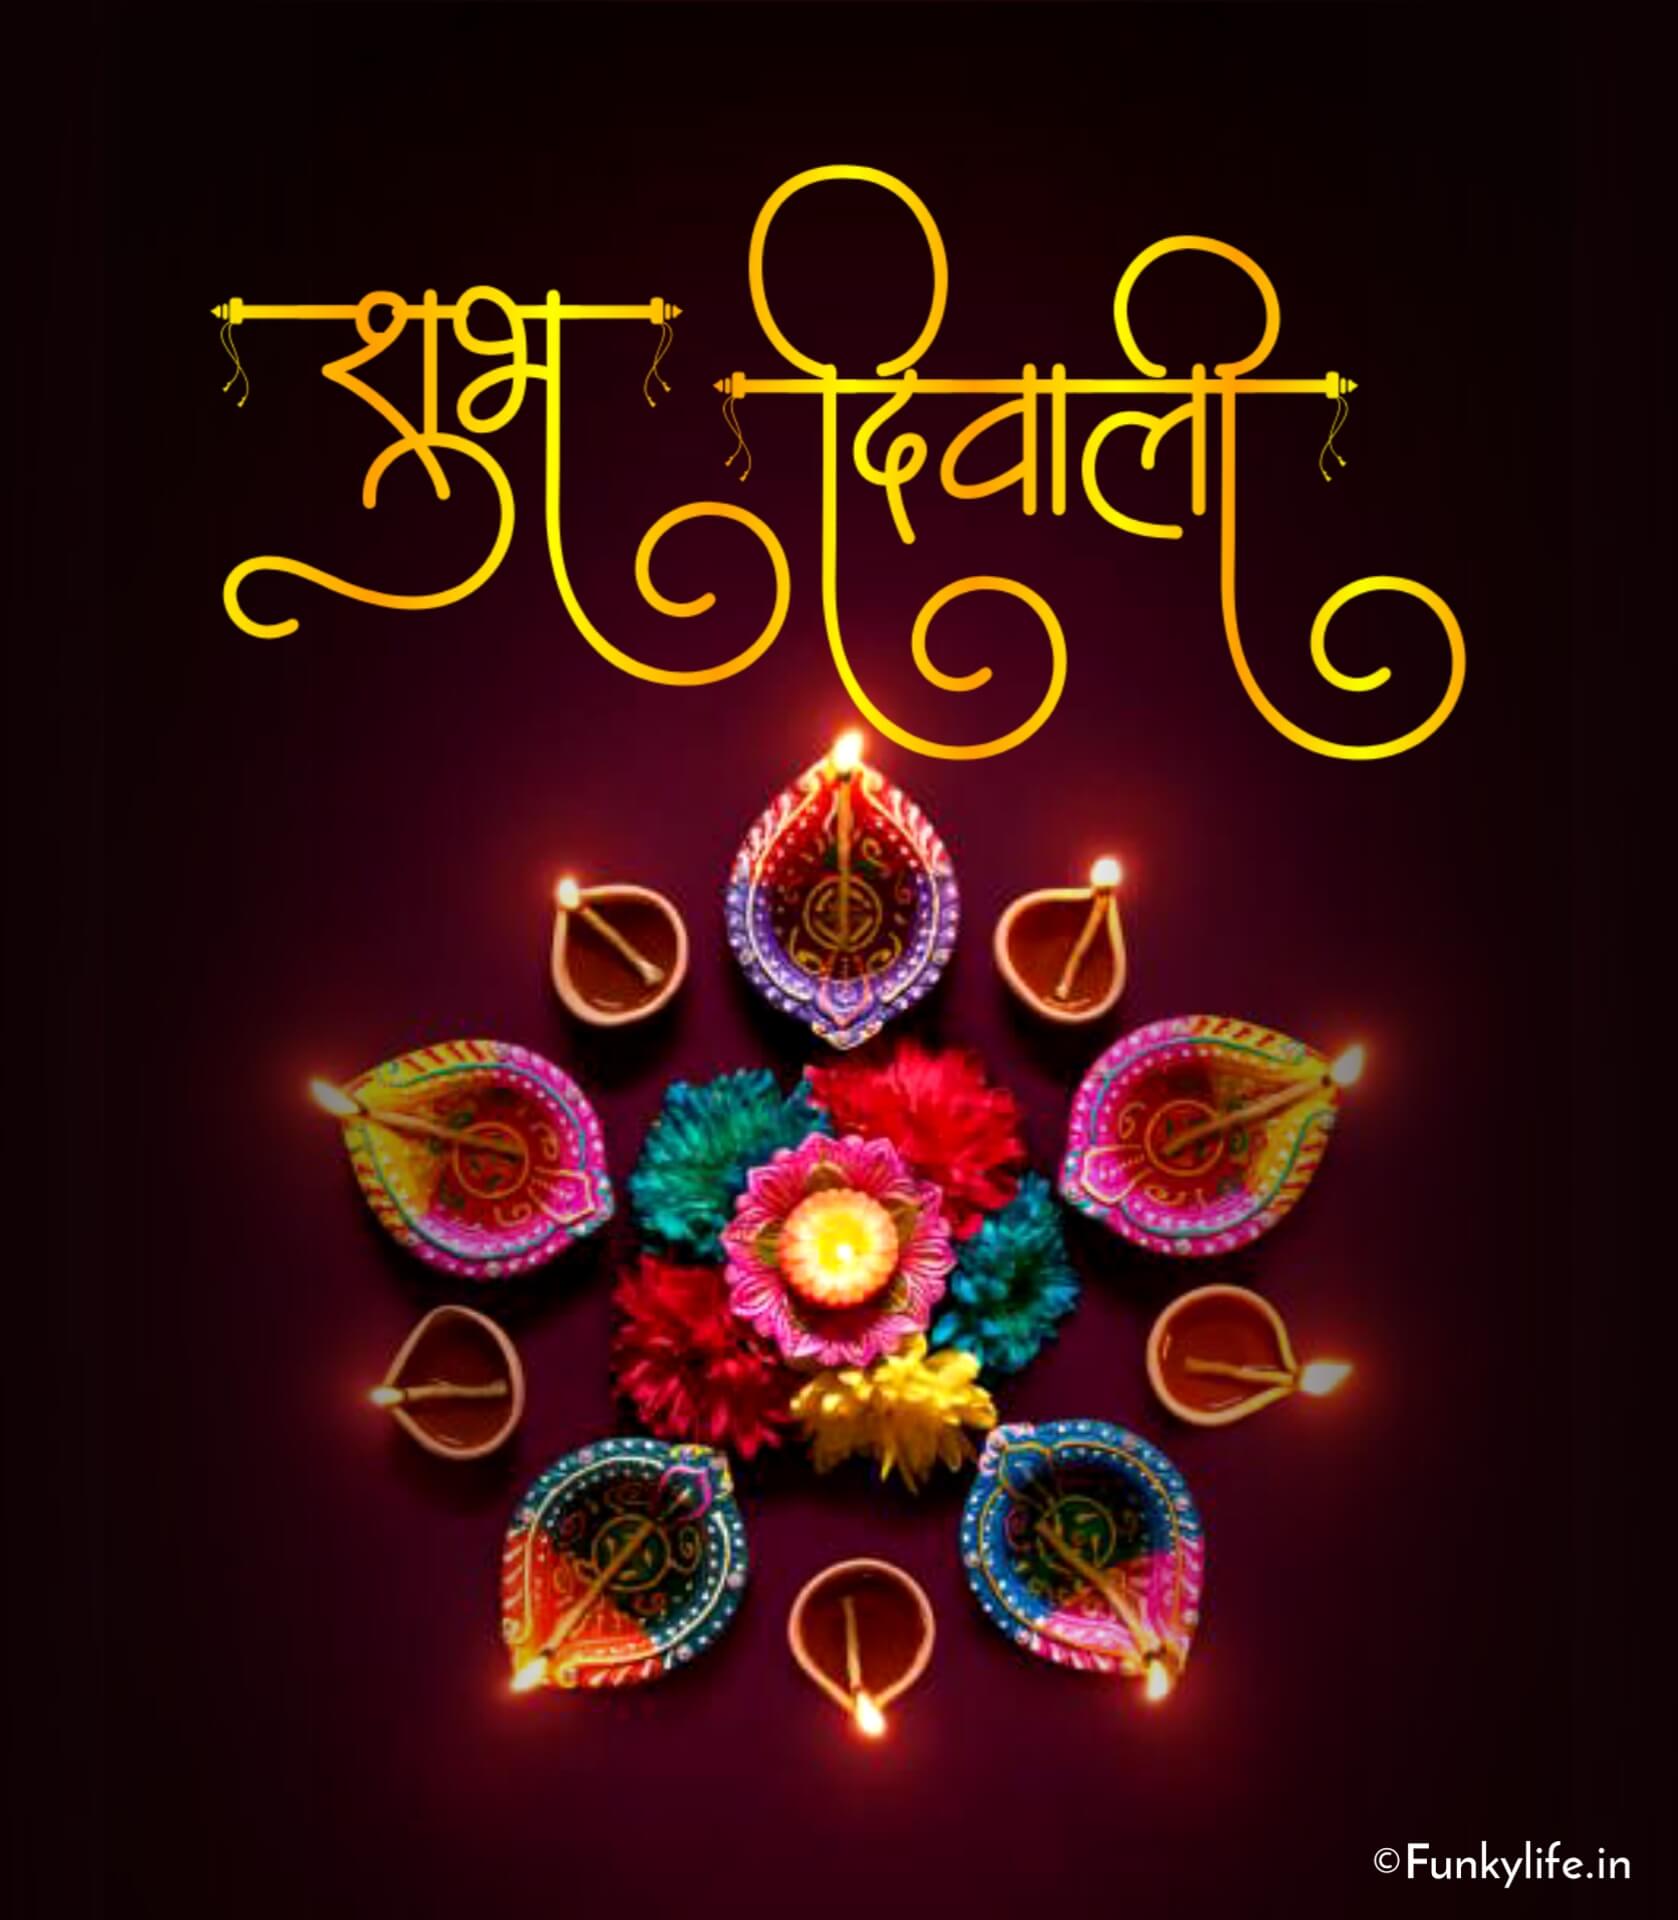 Hindi Diwali Image